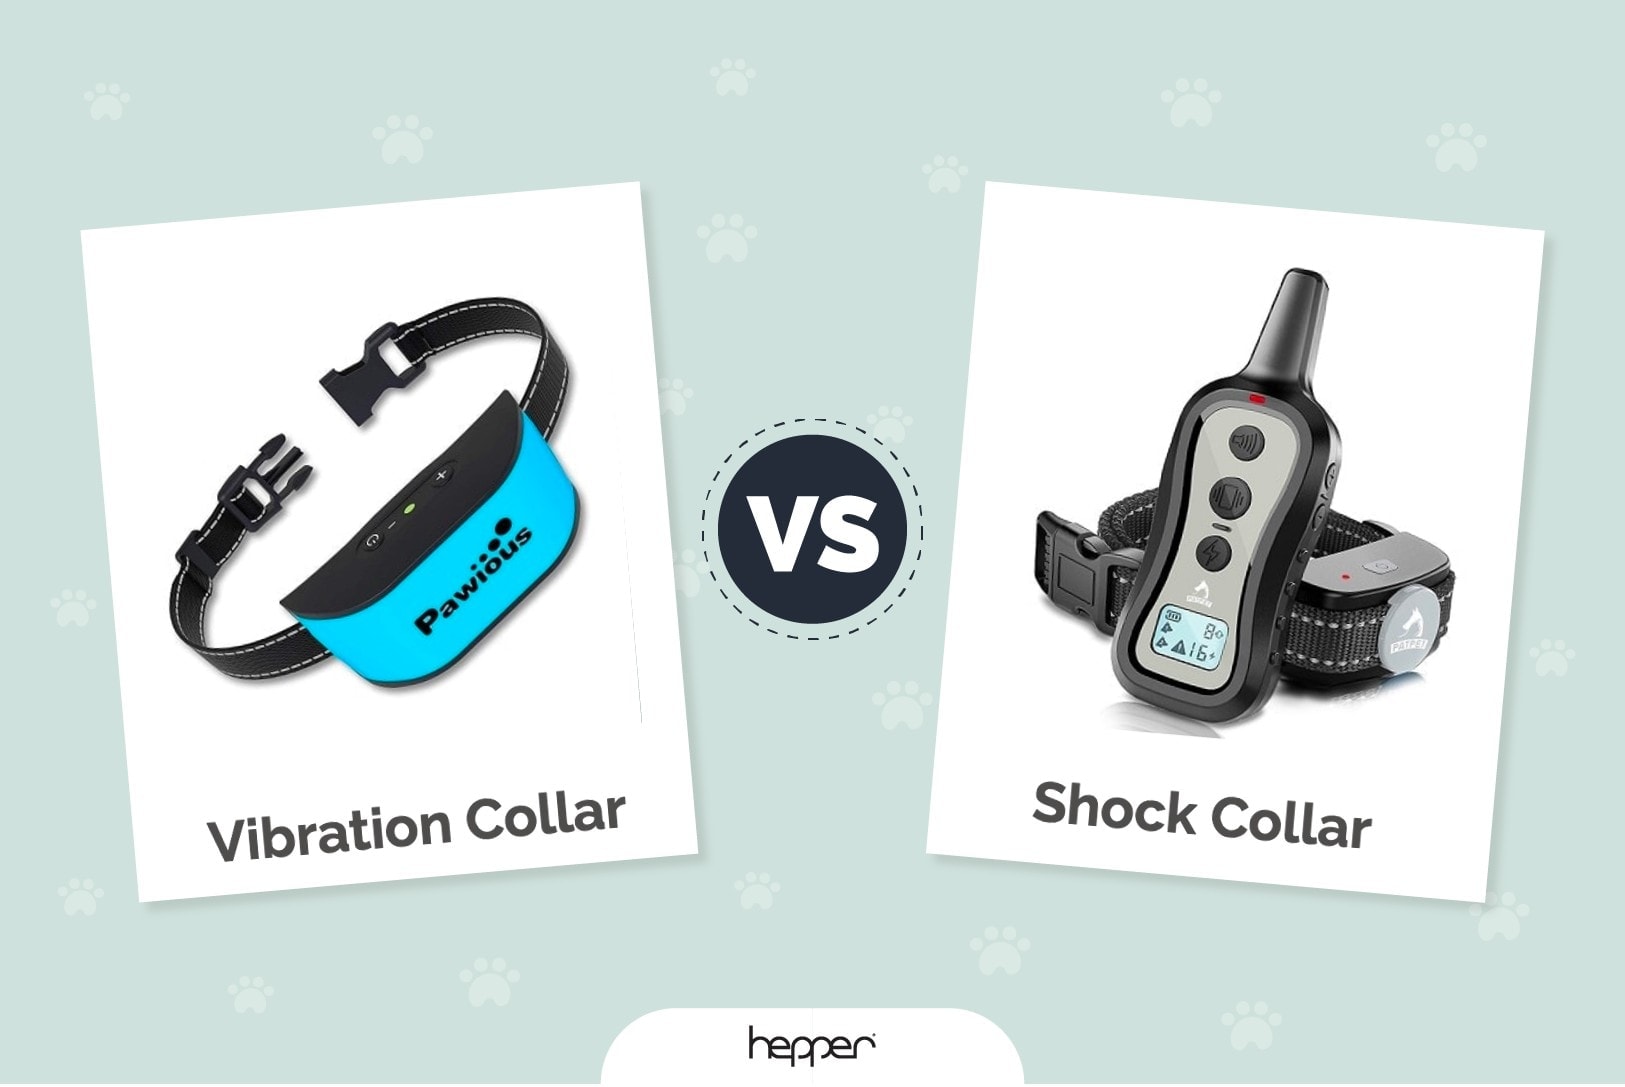 Hepper vibration vs shock collar